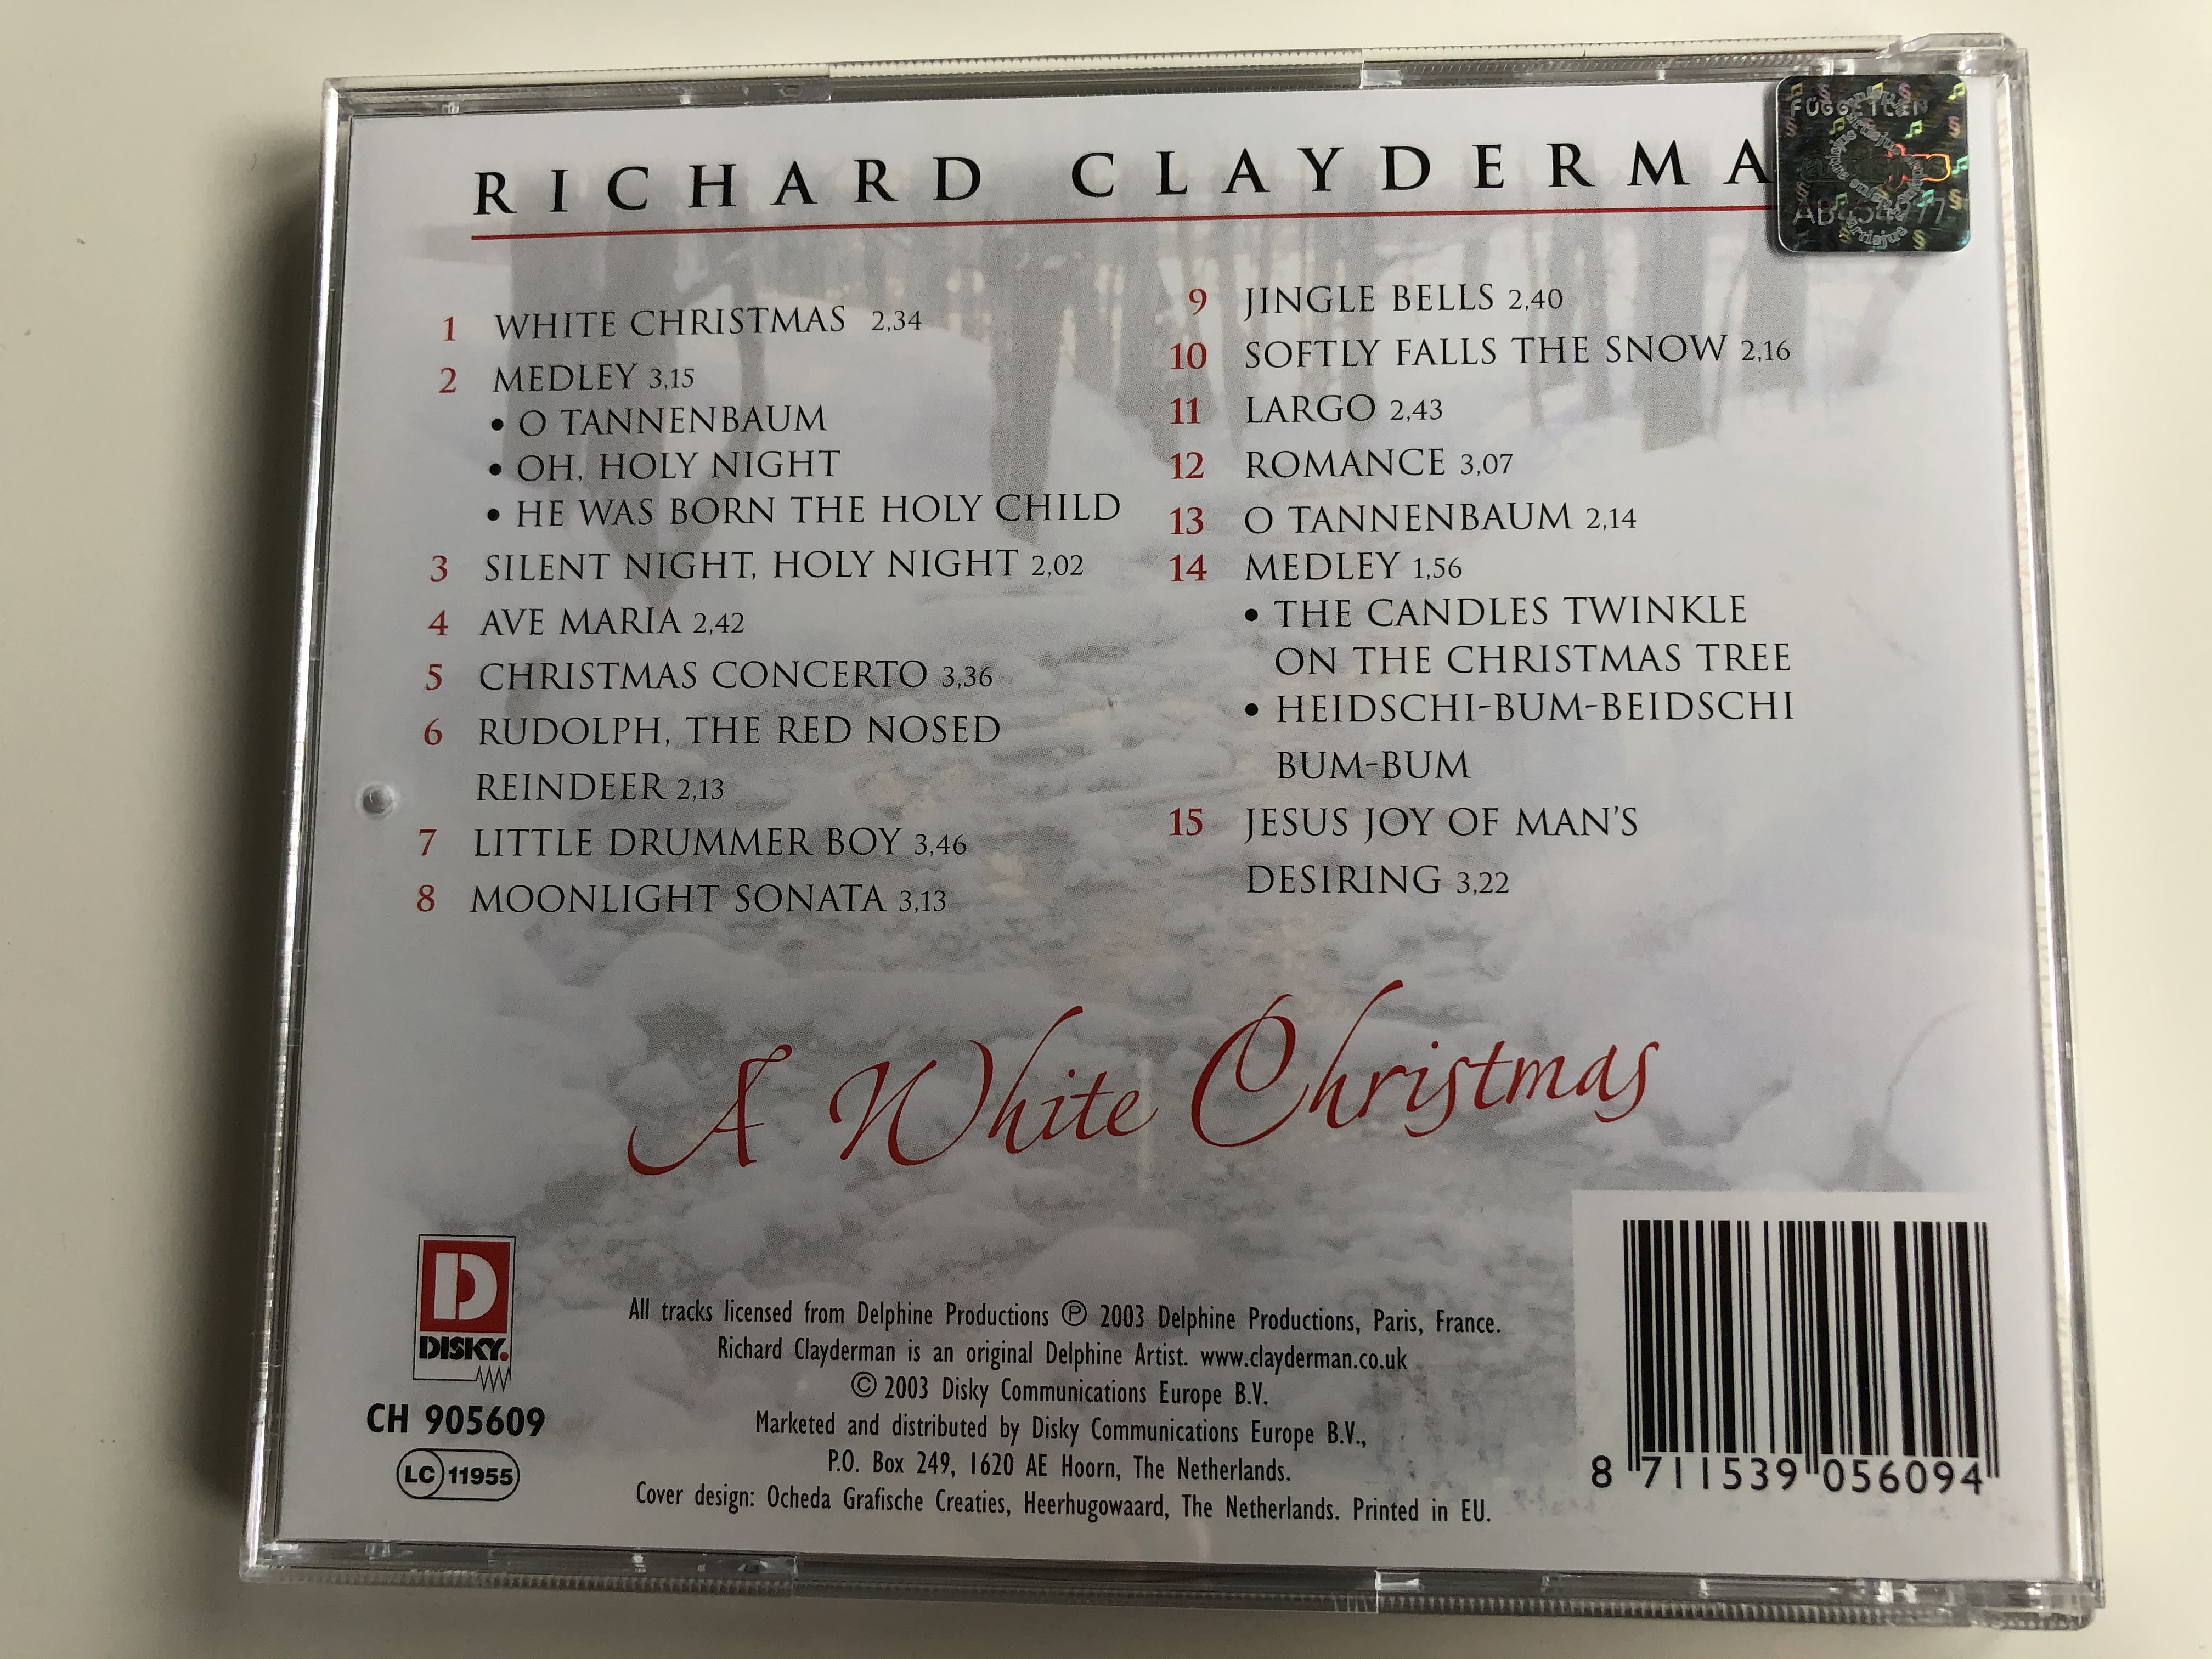 a-white-christmas-richard-clayderman-disky-audio-cd-2003-ch-905609-5-.jpg